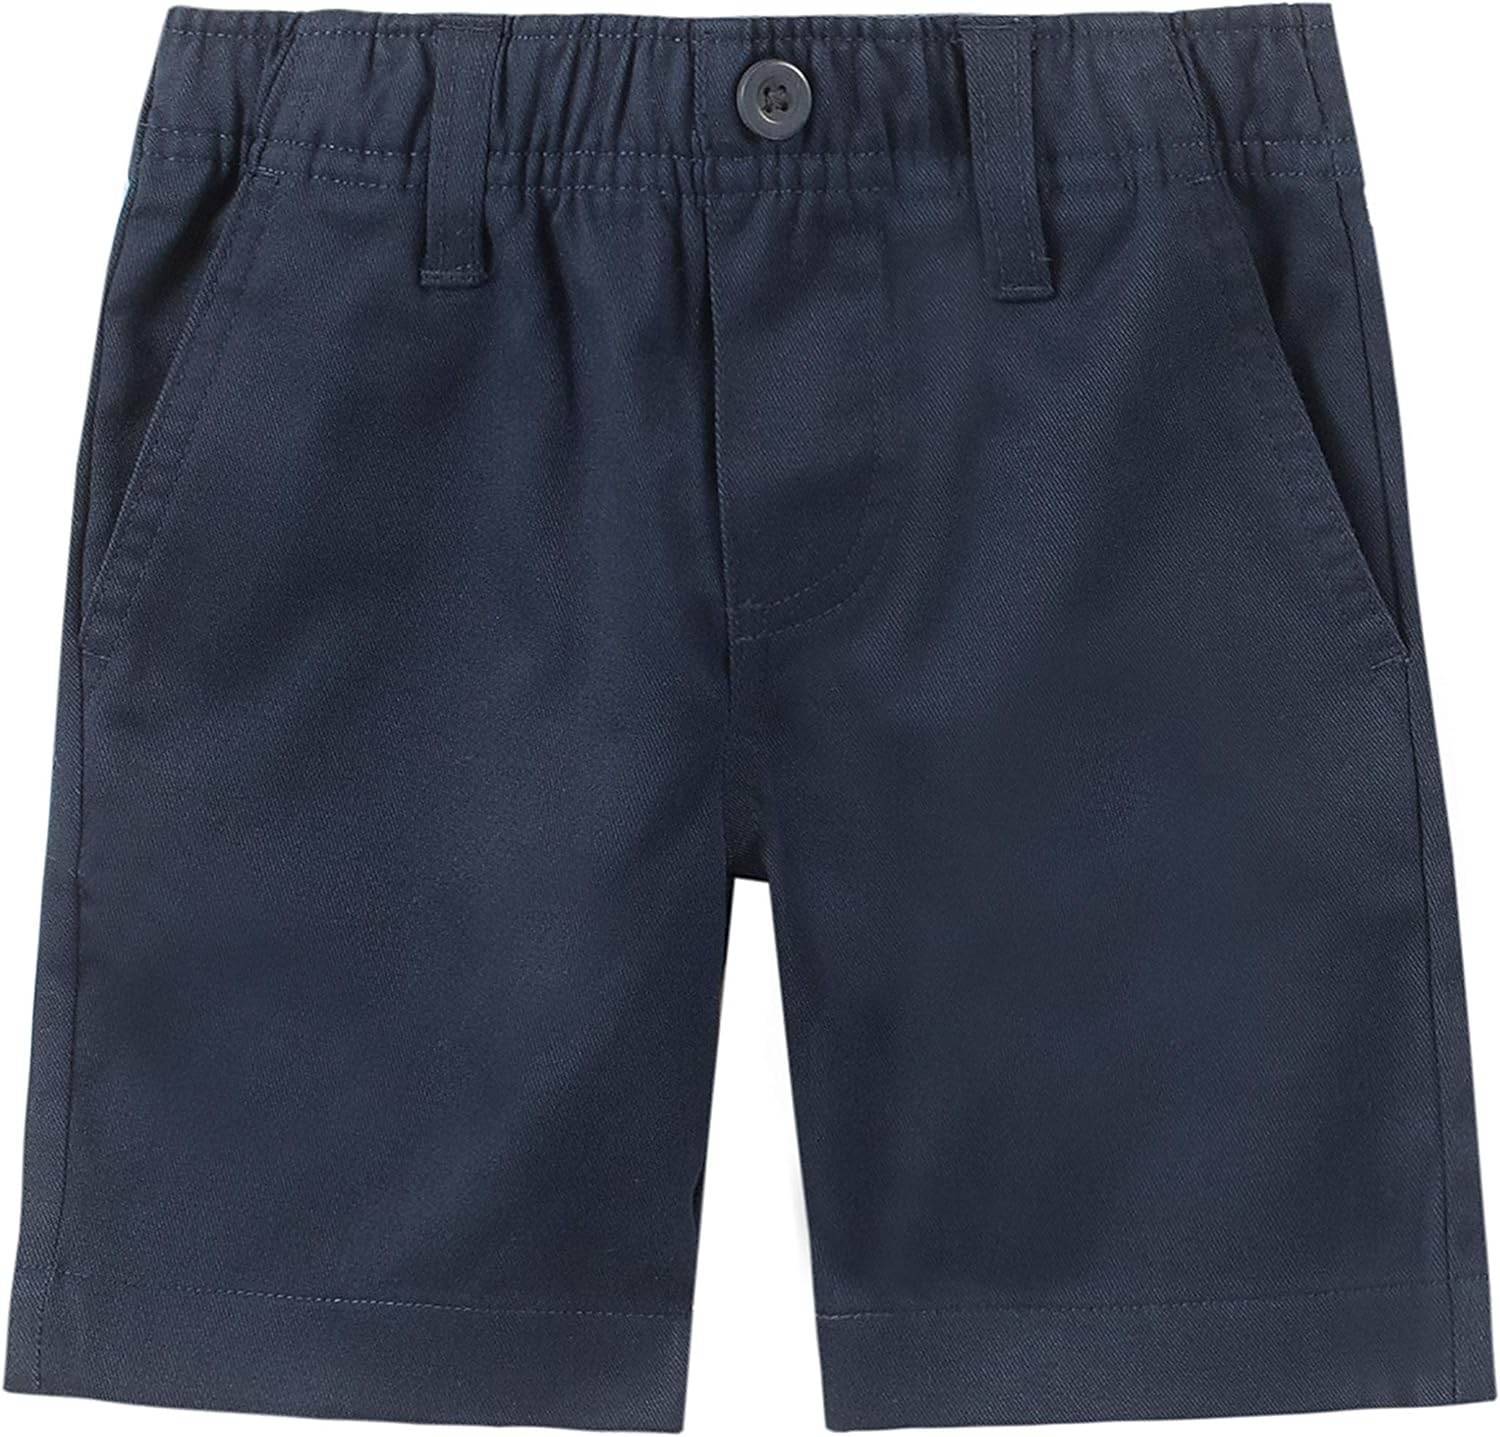 IZOD Toddler Boys' School Uniform Pull-on Shorts